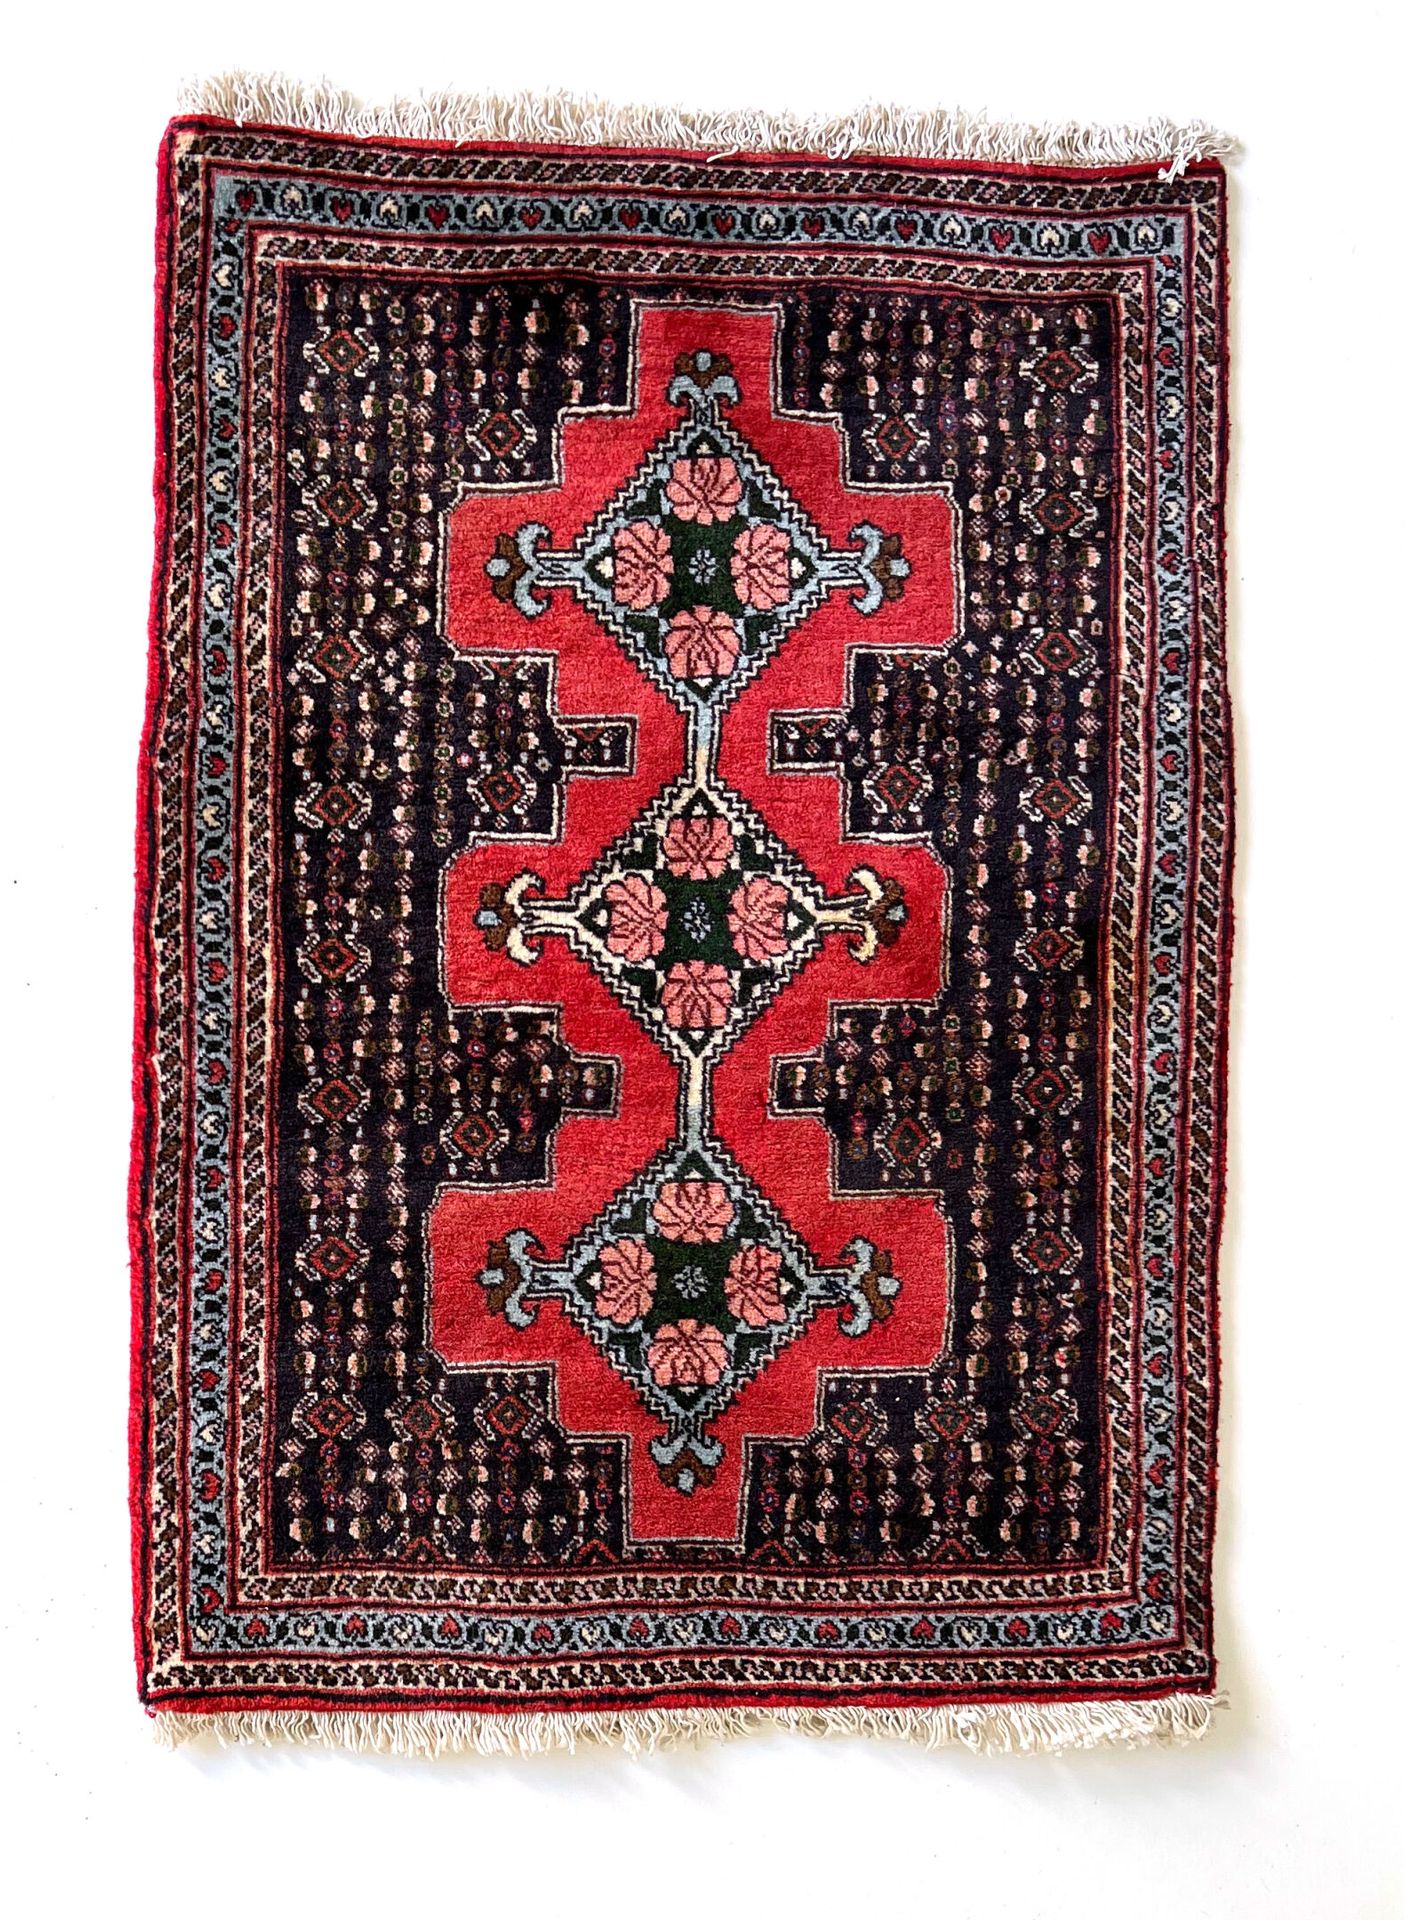 Null 东方的地毯

棕色、红色和天蓝色的地毯。饰有风格化的几何图案。

状况良好 - 长1.04 x 宽0.72厘米